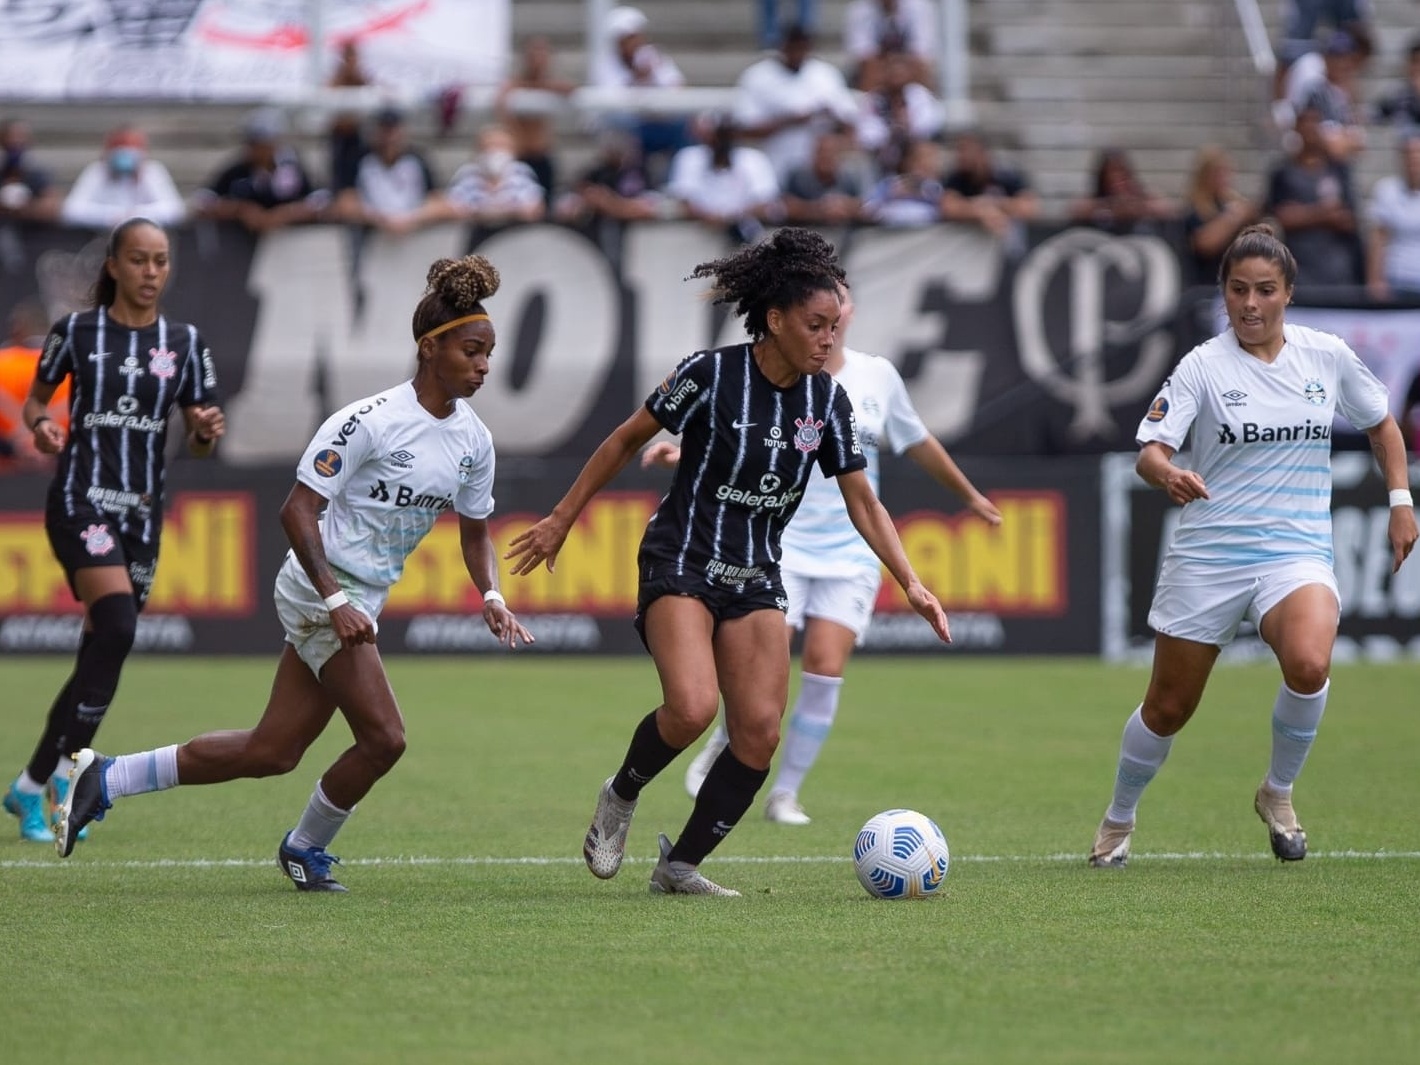 Corinthians Futebol Feminino on X: HOJE TEM CORINTHIANS FEMININO